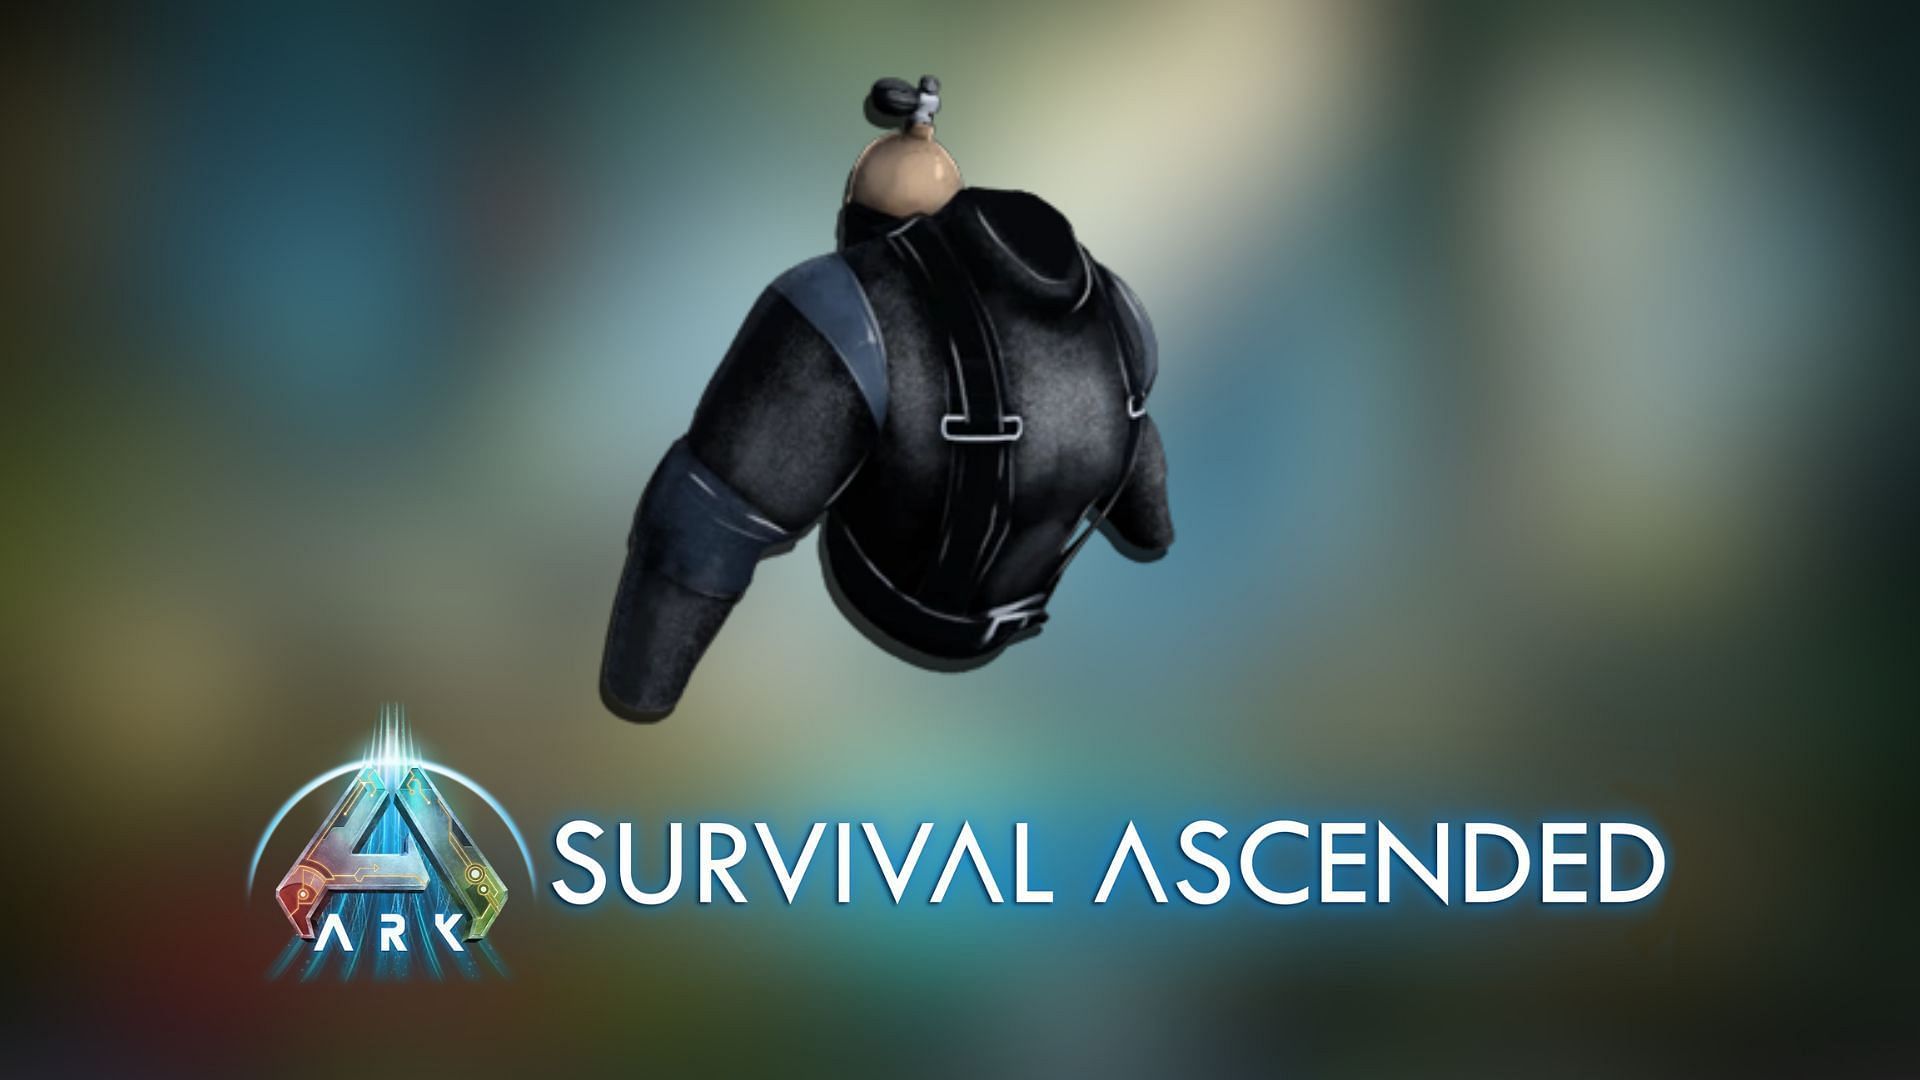 SCUBA armor is essential for exploring the sea in Ark Survival Ascended (Image via Studio Wildcard)